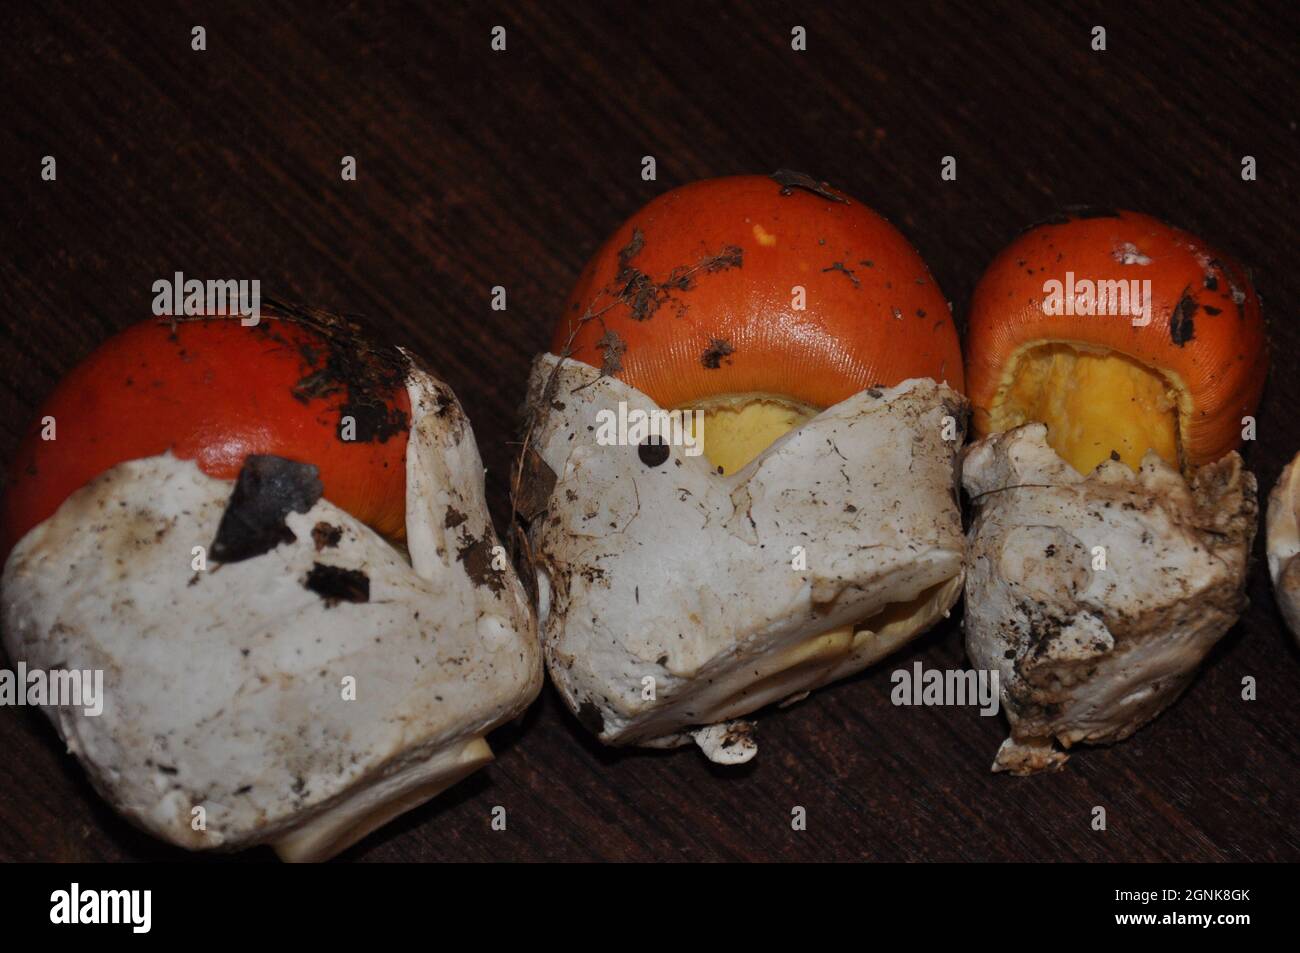 Amanita Caesarea mushroom, also known as Caesar mushroom. Forest mushrooms on a brown wooden table Stock Photo